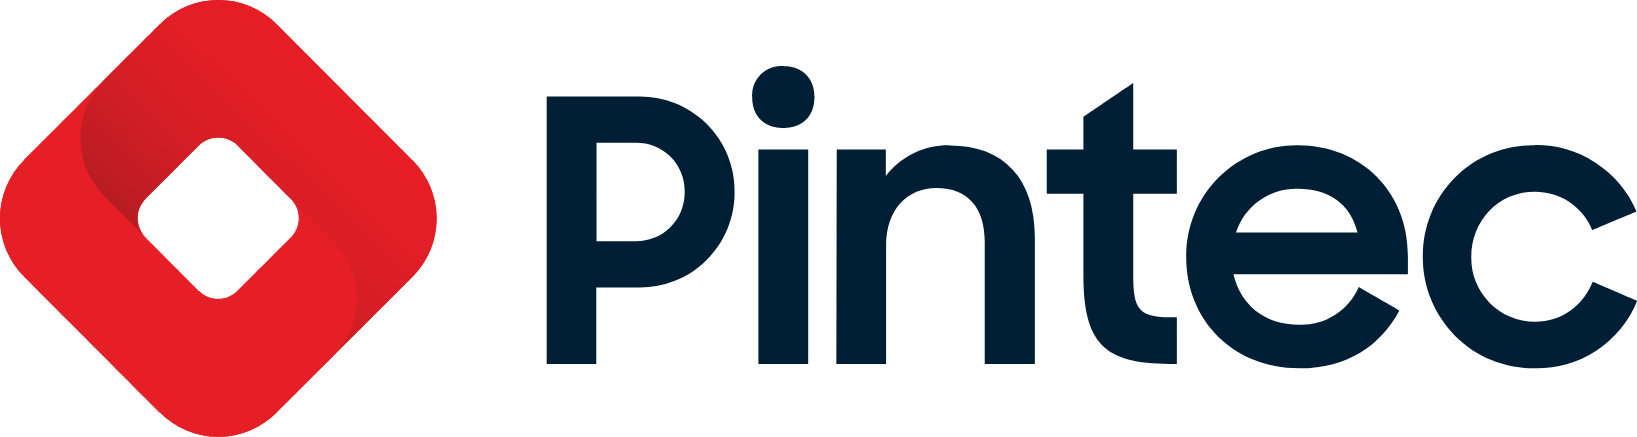 Pintec Technology logo large (transparent PNG)